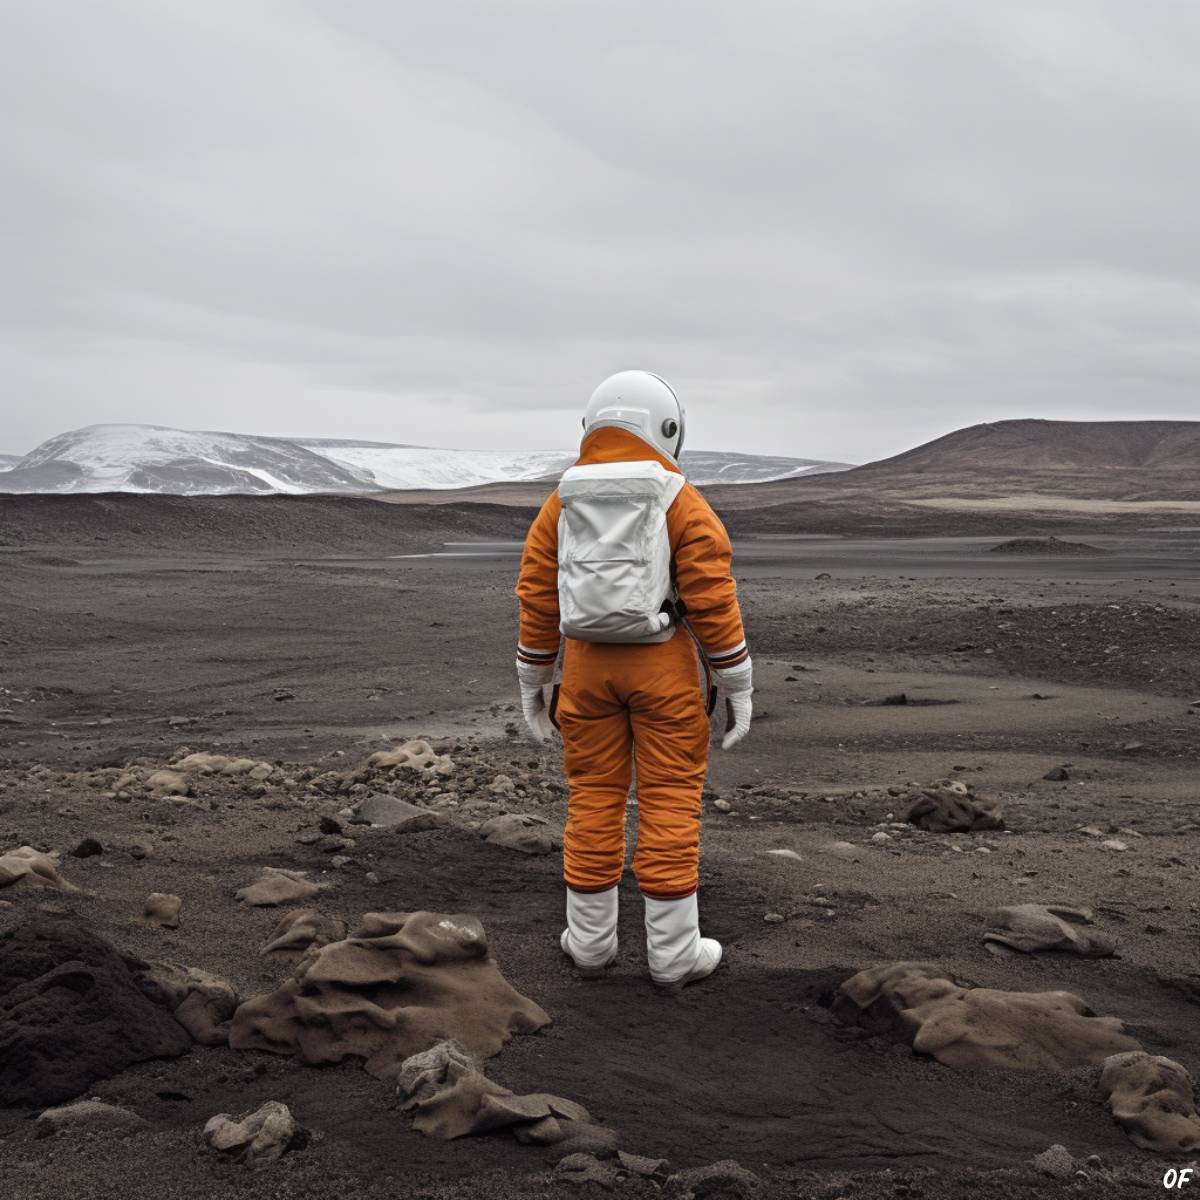 A scientist researcher wearing a prototype spacesuit looking across the desloate landscape of Devon Island.